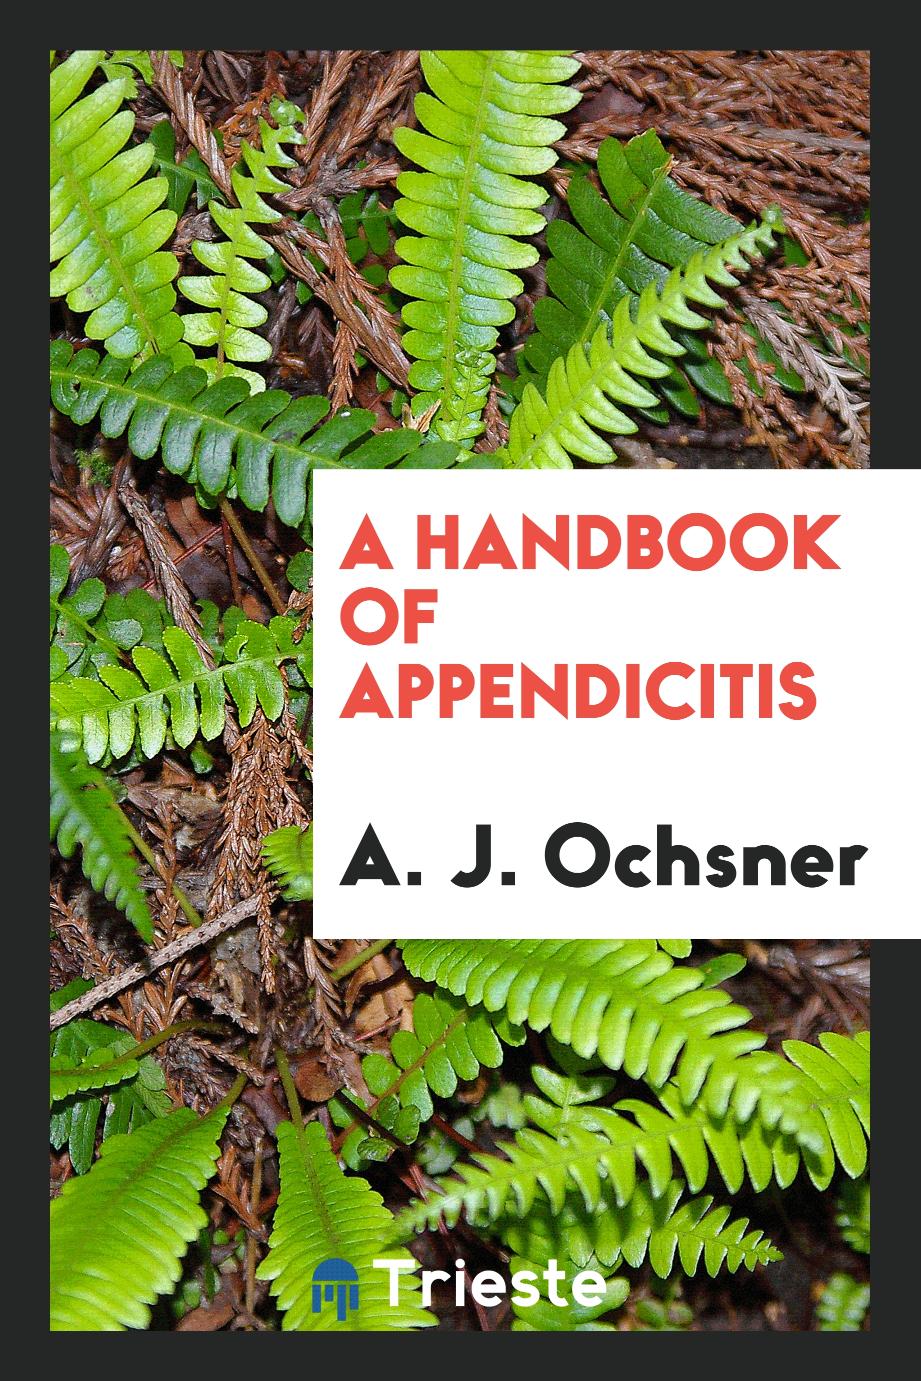 A handbook of appendicitis